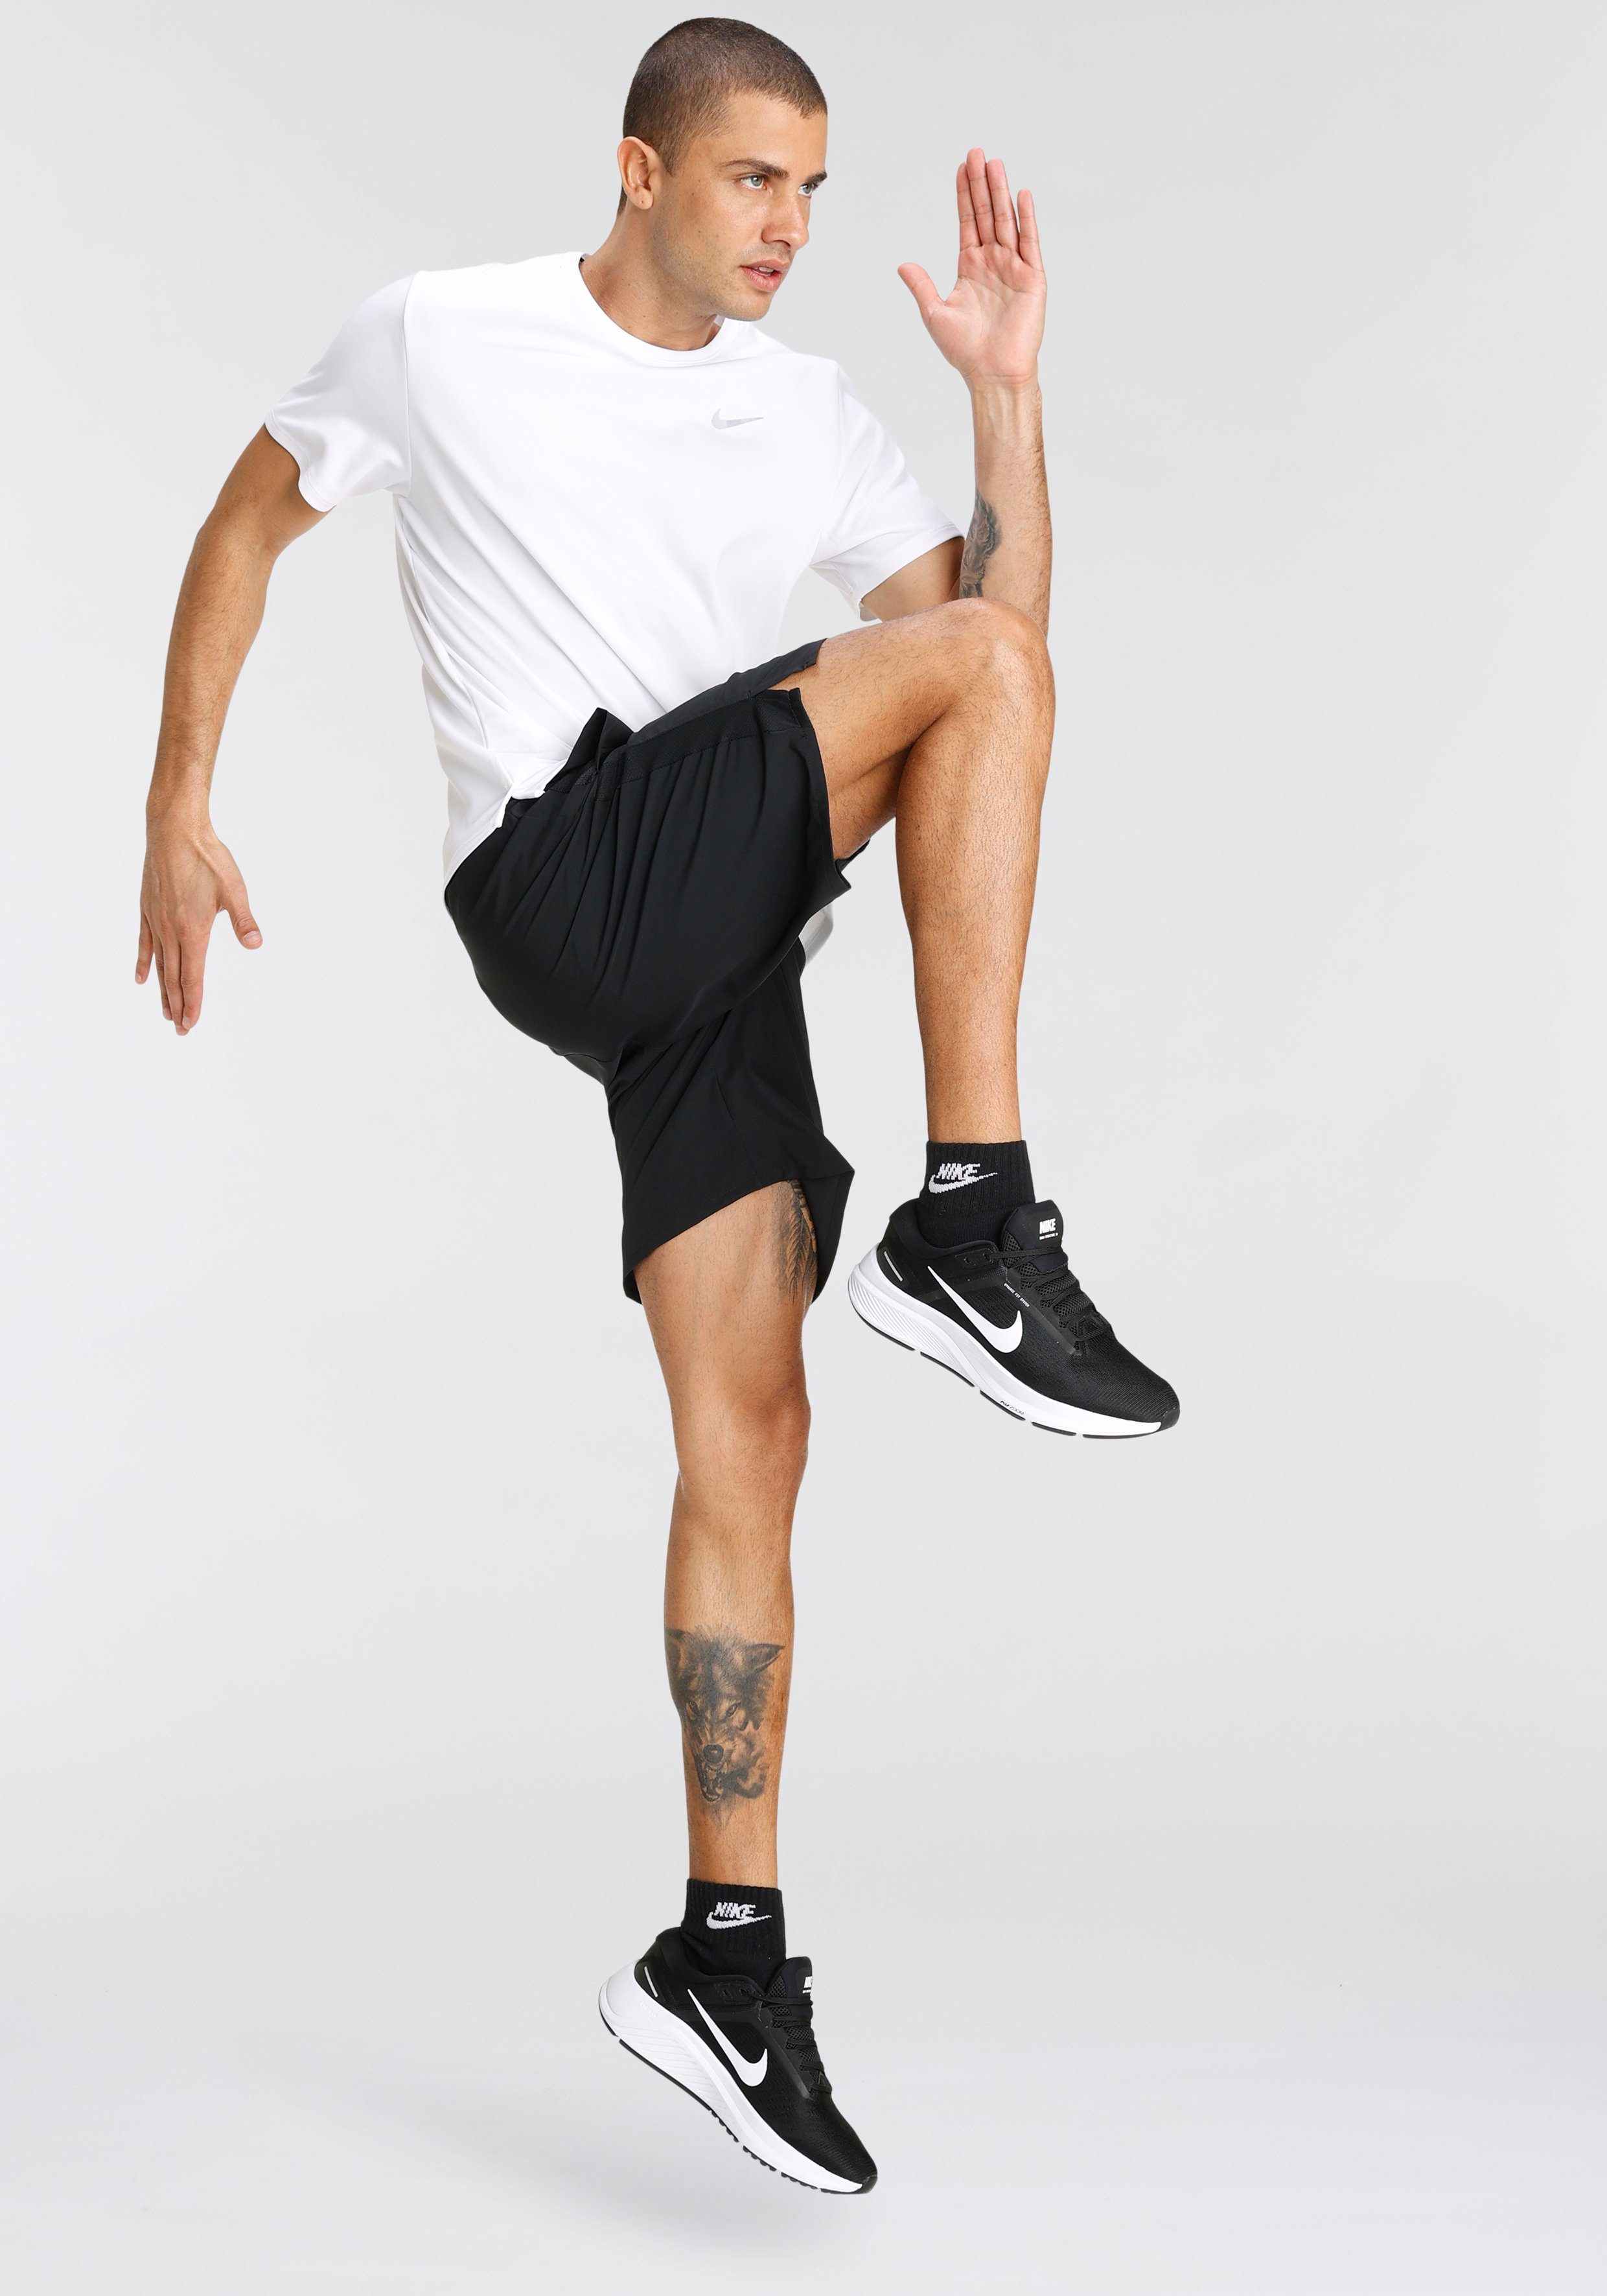 UV SHORT-SLEEVE MEN'S RUNNING MILER Laufshirt SILV WHITE/REFLECTIVE Nike DRI-FIT TOP